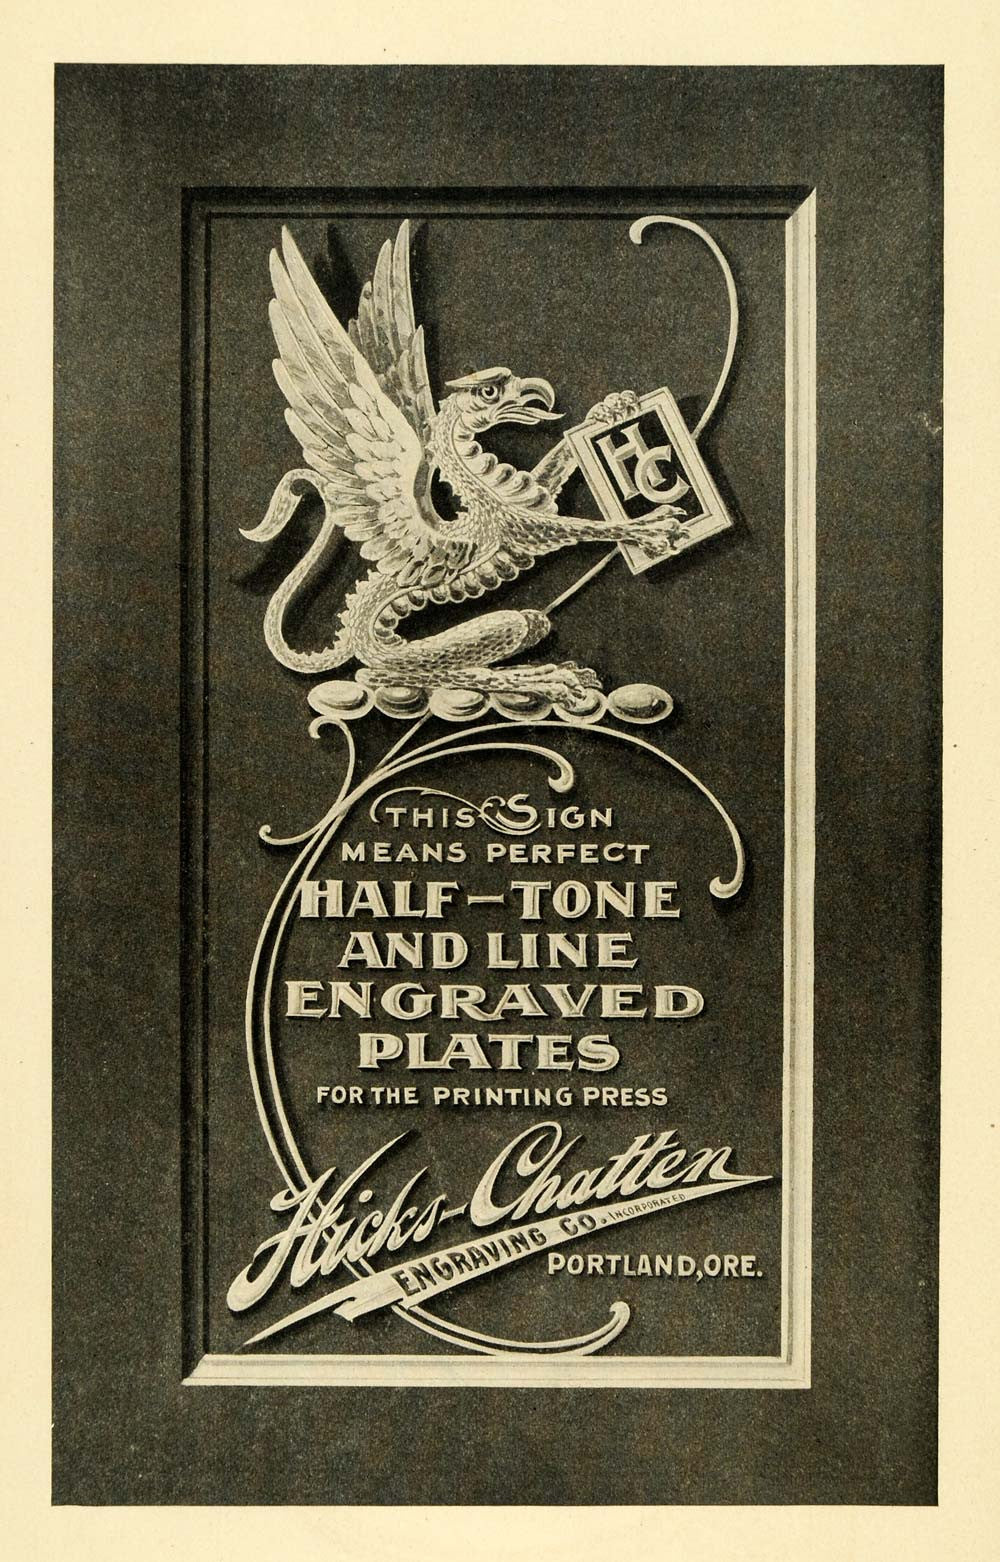 1906 Ad Engraving Hicks-Chatten Printing Press Portland - ORIGINAL PM2 - Period Paper
